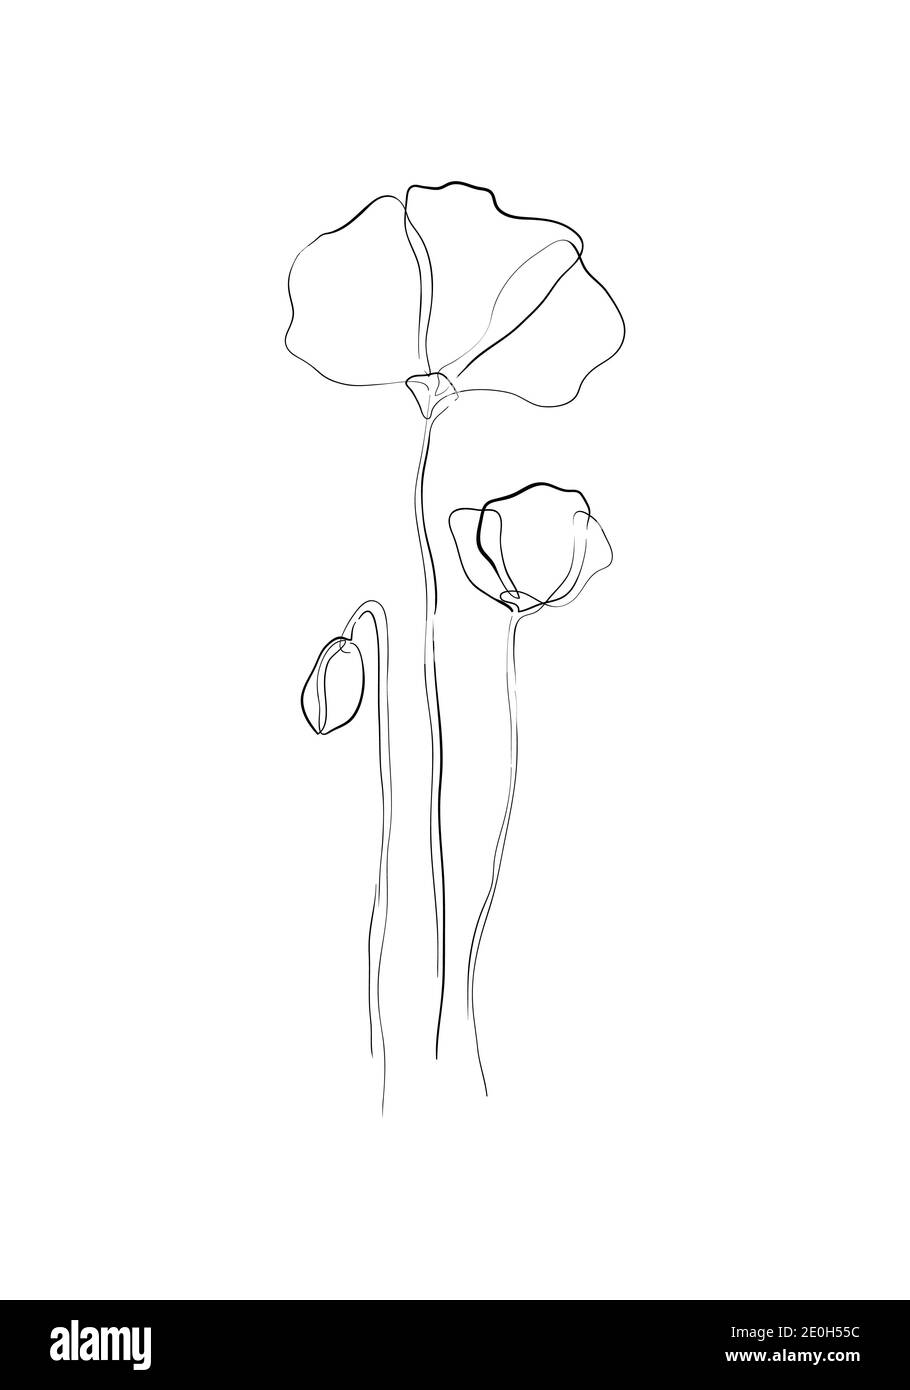 line art-Poppy flower Minimalist contour drawing. One line artwork ...